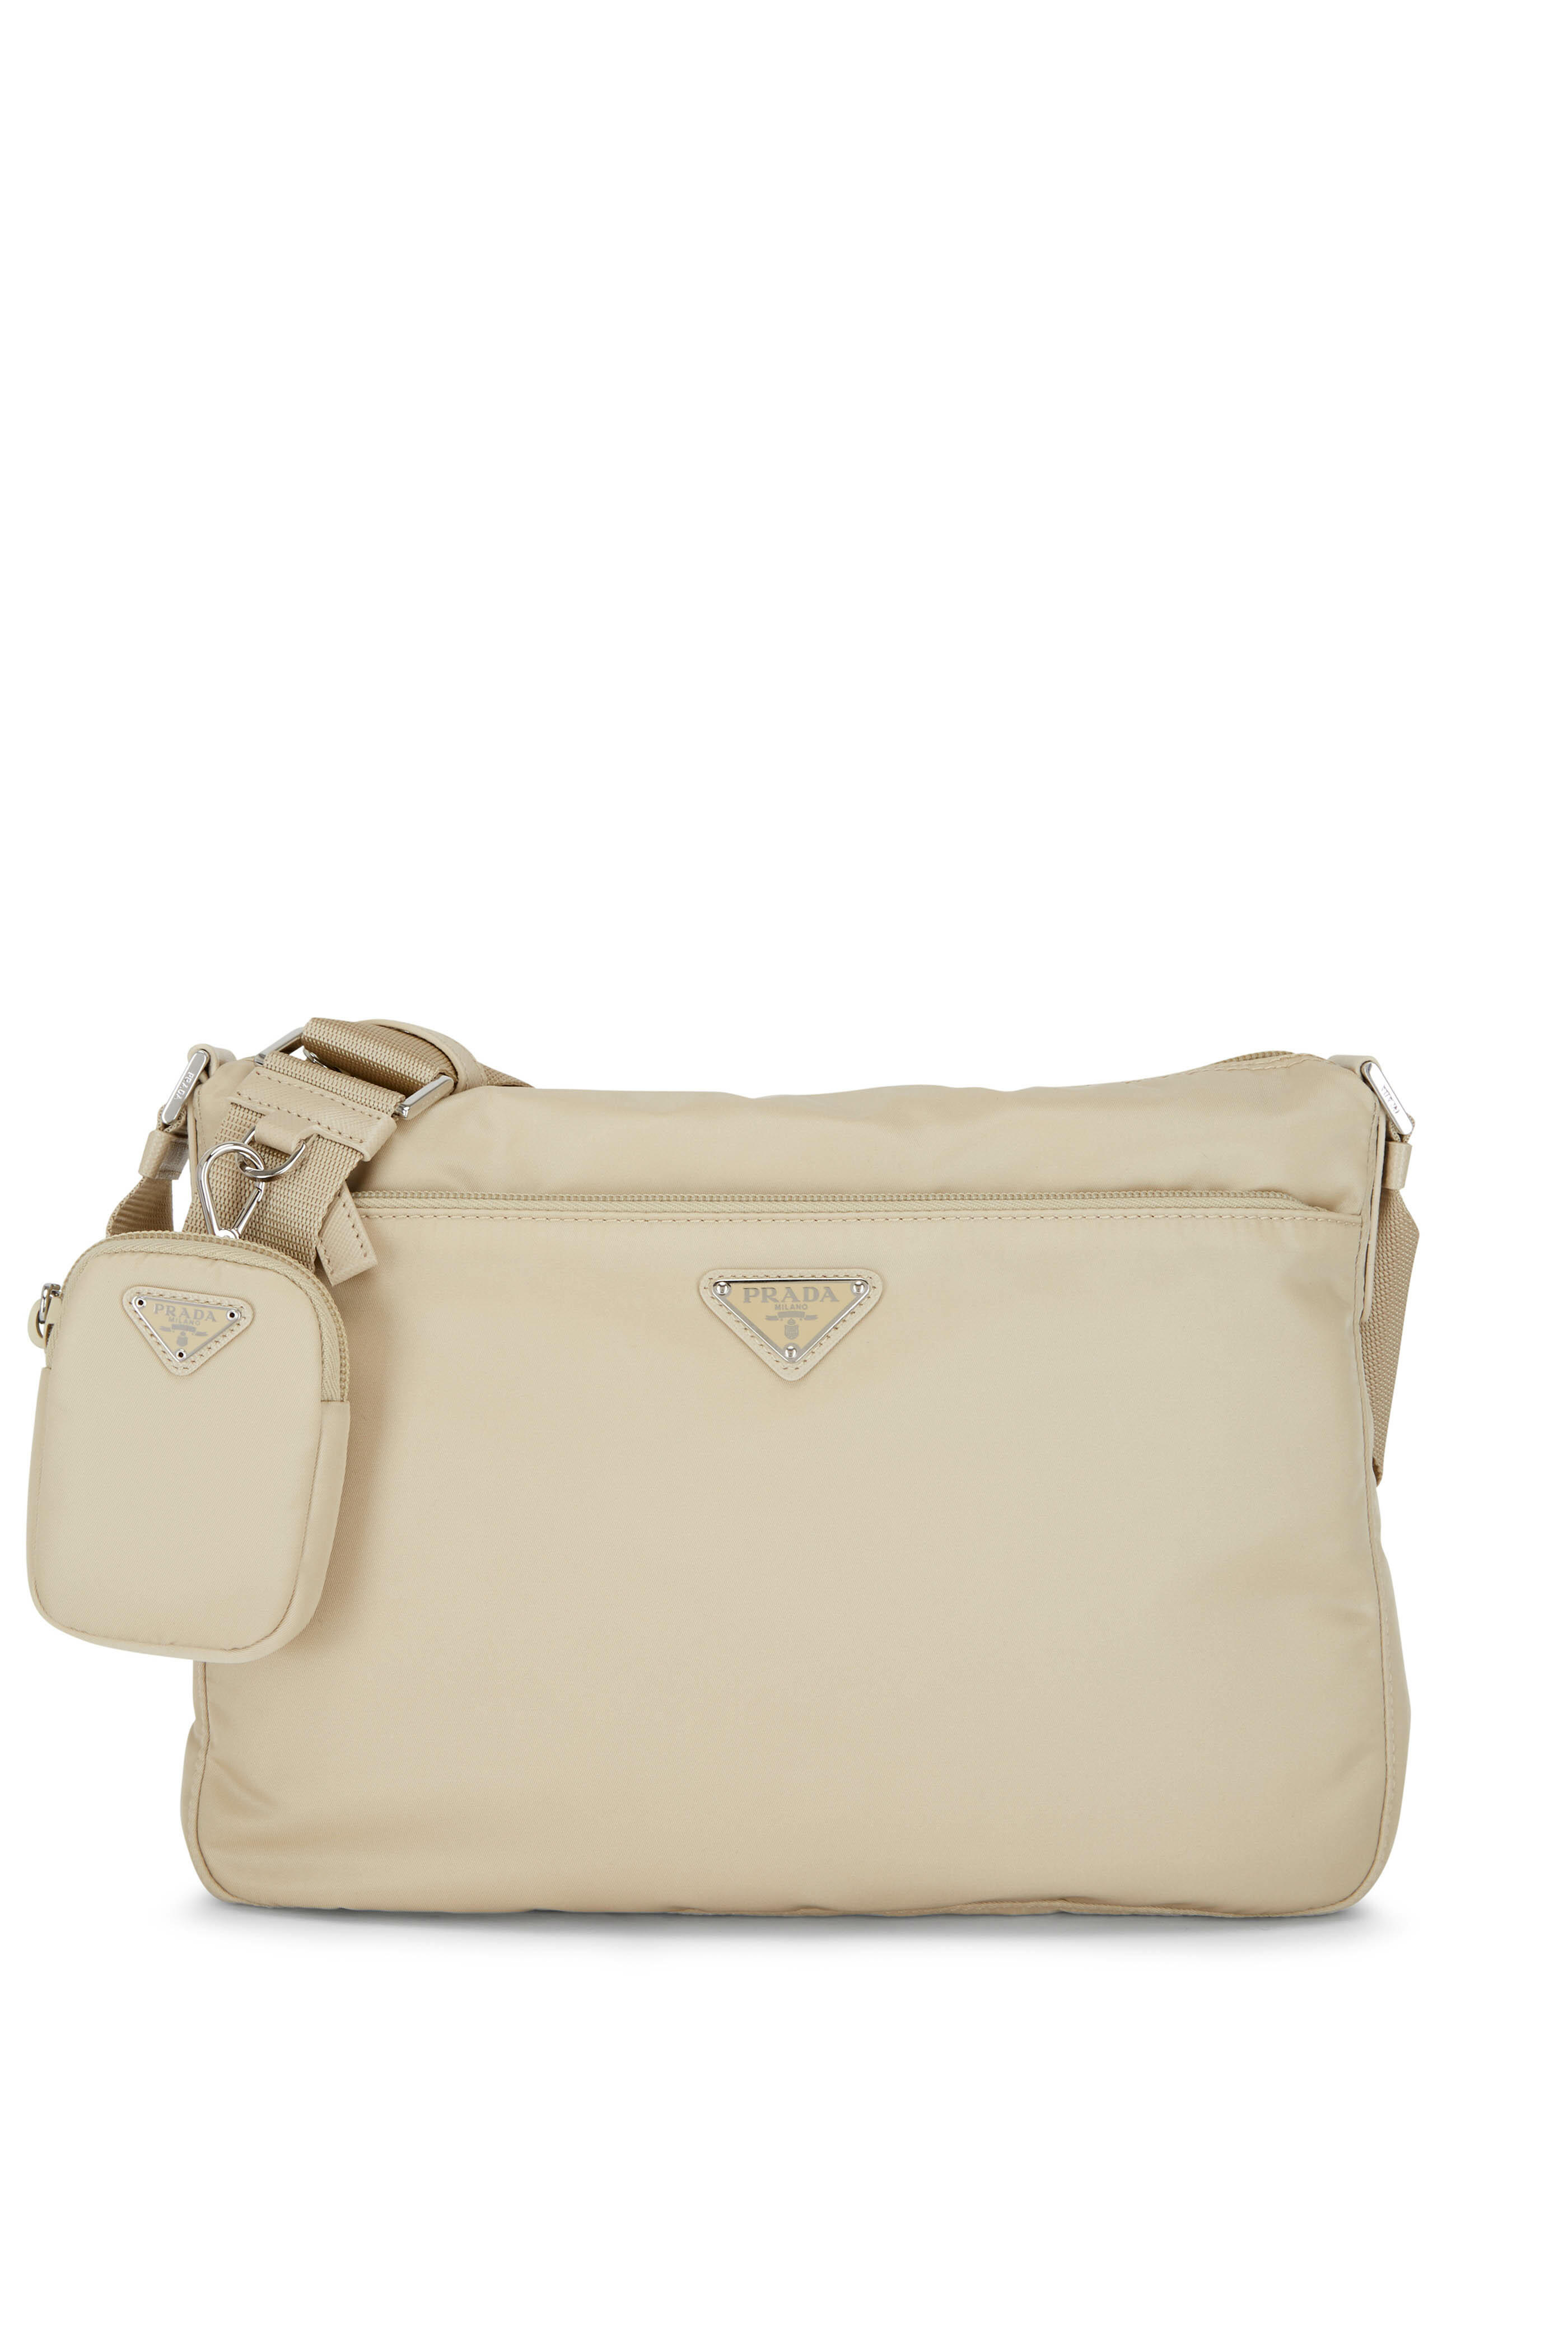 Prada - Deserto Tan ReNylon Pouch Shoulder Bag | Mitchell Stores